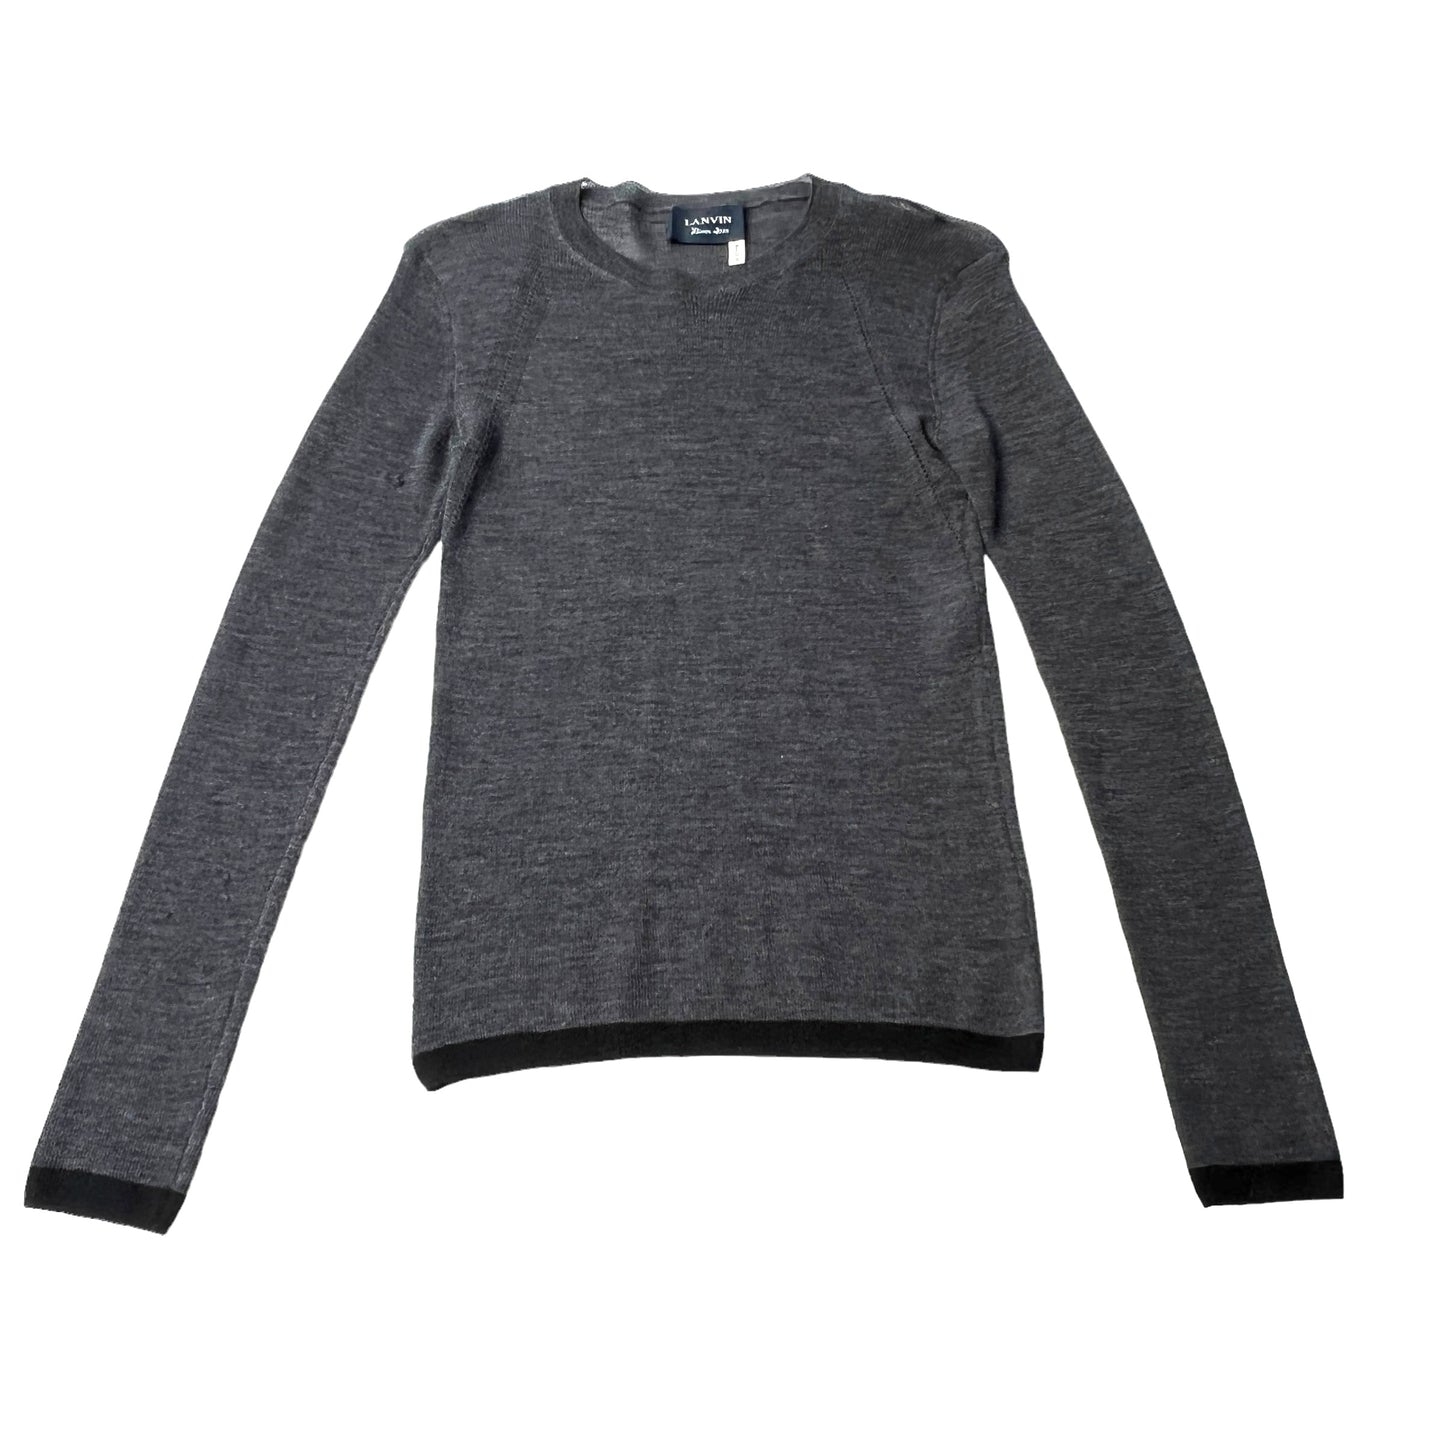 Grey Light Wool Sweater - S